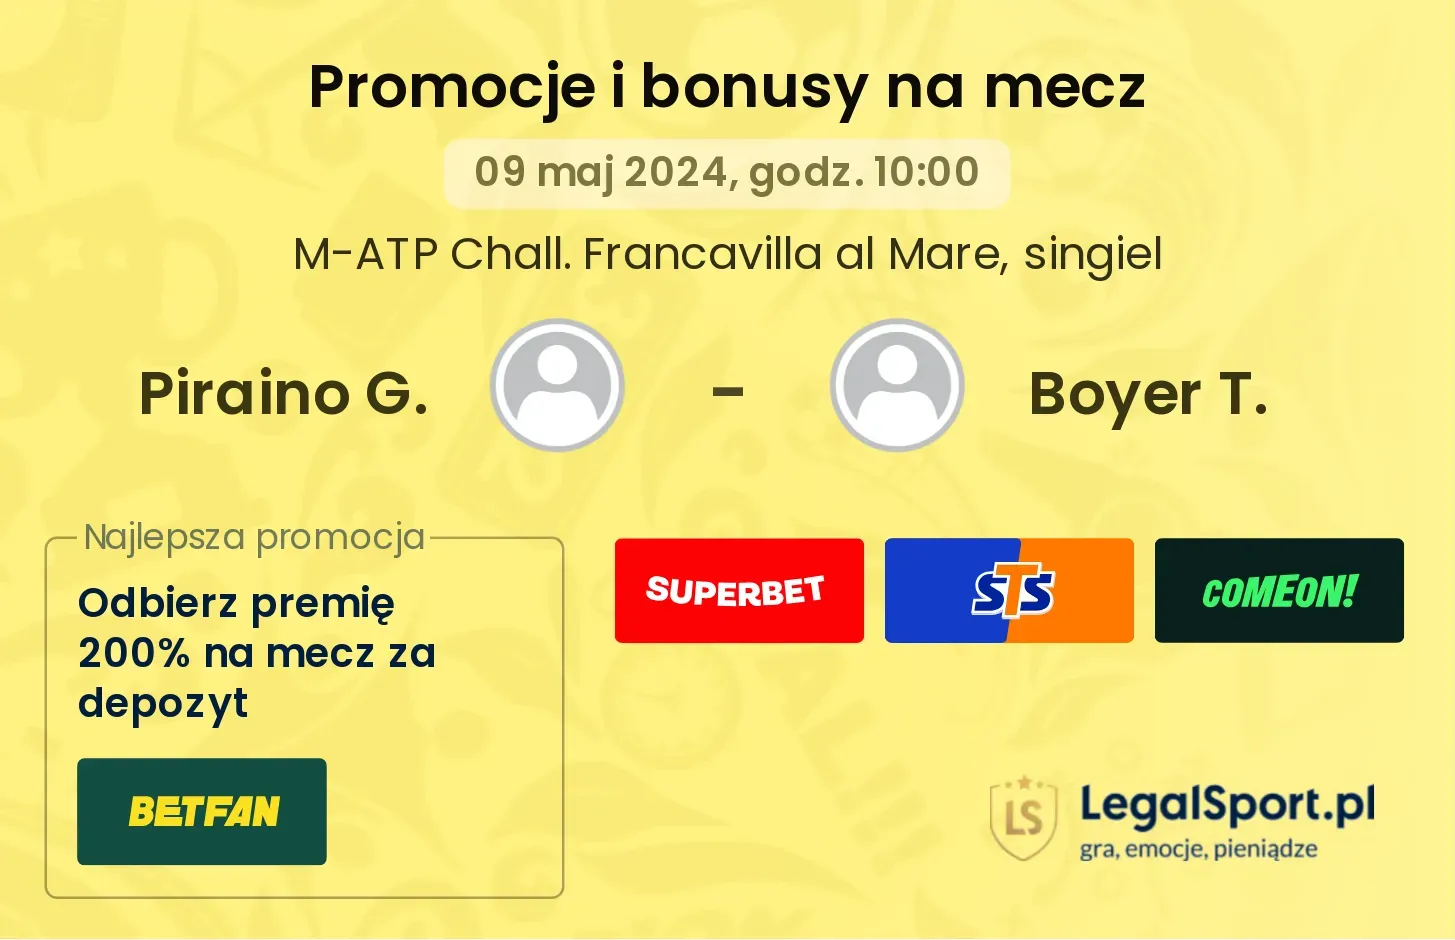 Piraino G. - Boyer T. promocje bonusy na mecz